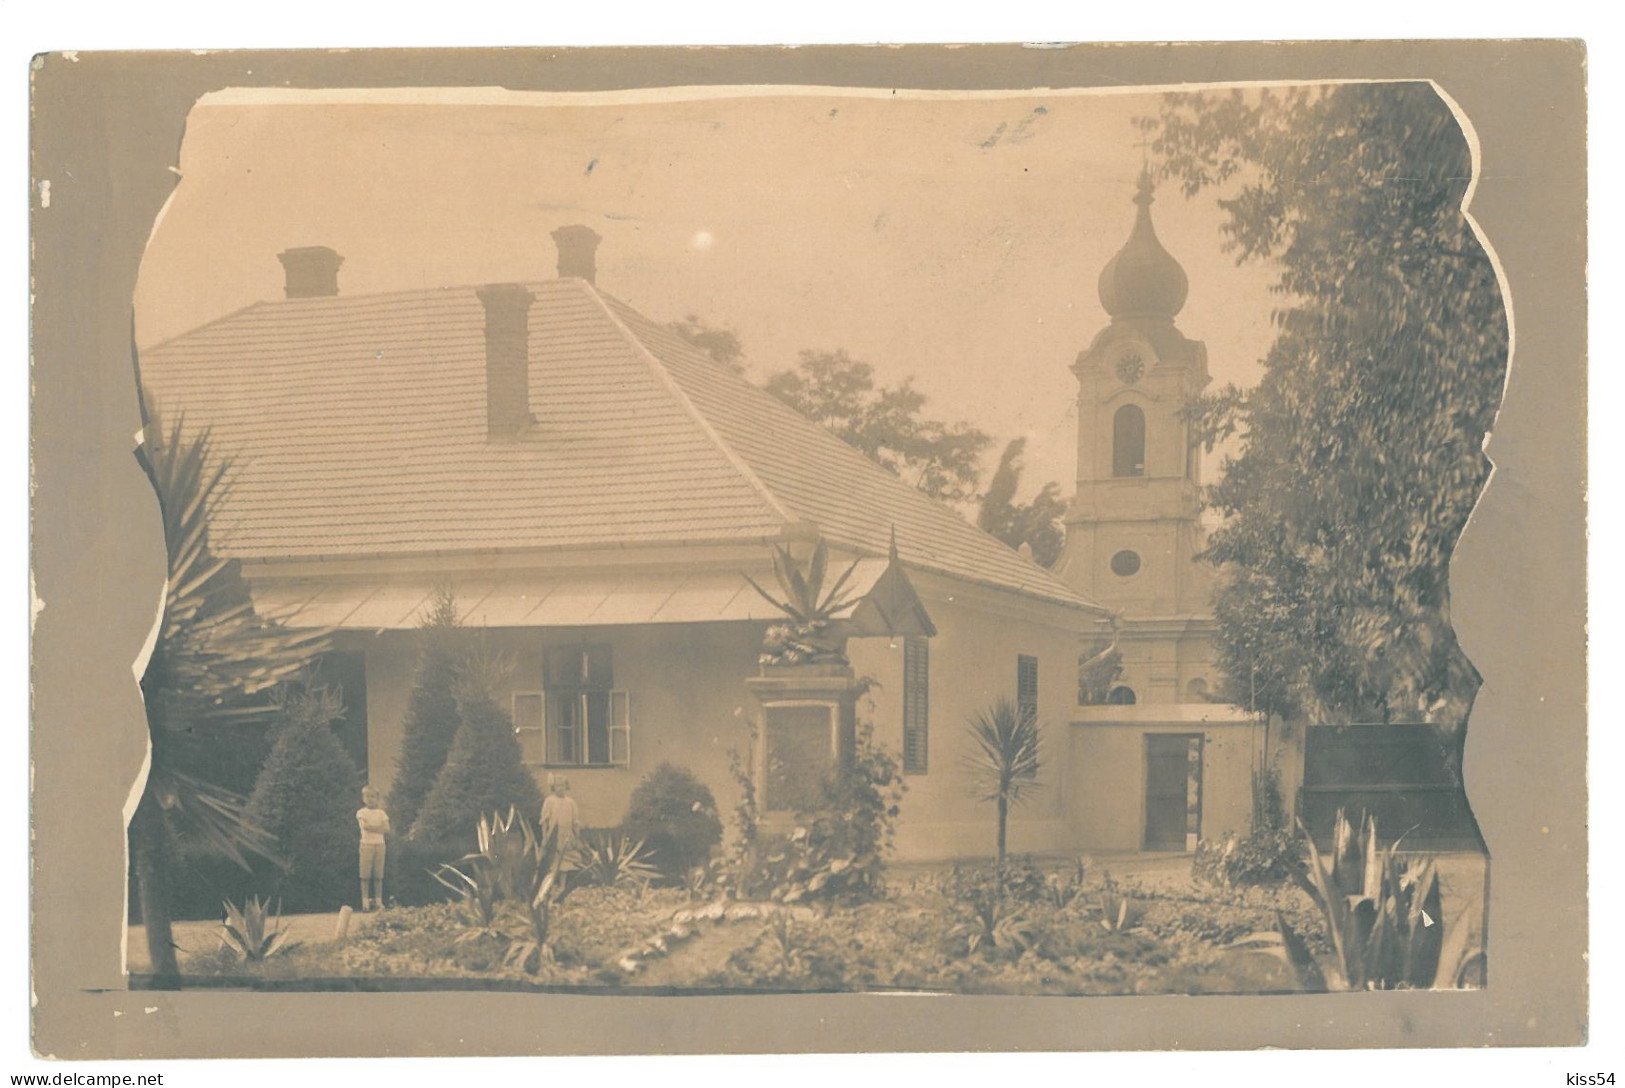 RO 36 - 16751 CHISINAU-CRIS, Bihor, Romania - Old Postcard - Used - 1912 - Rumänien